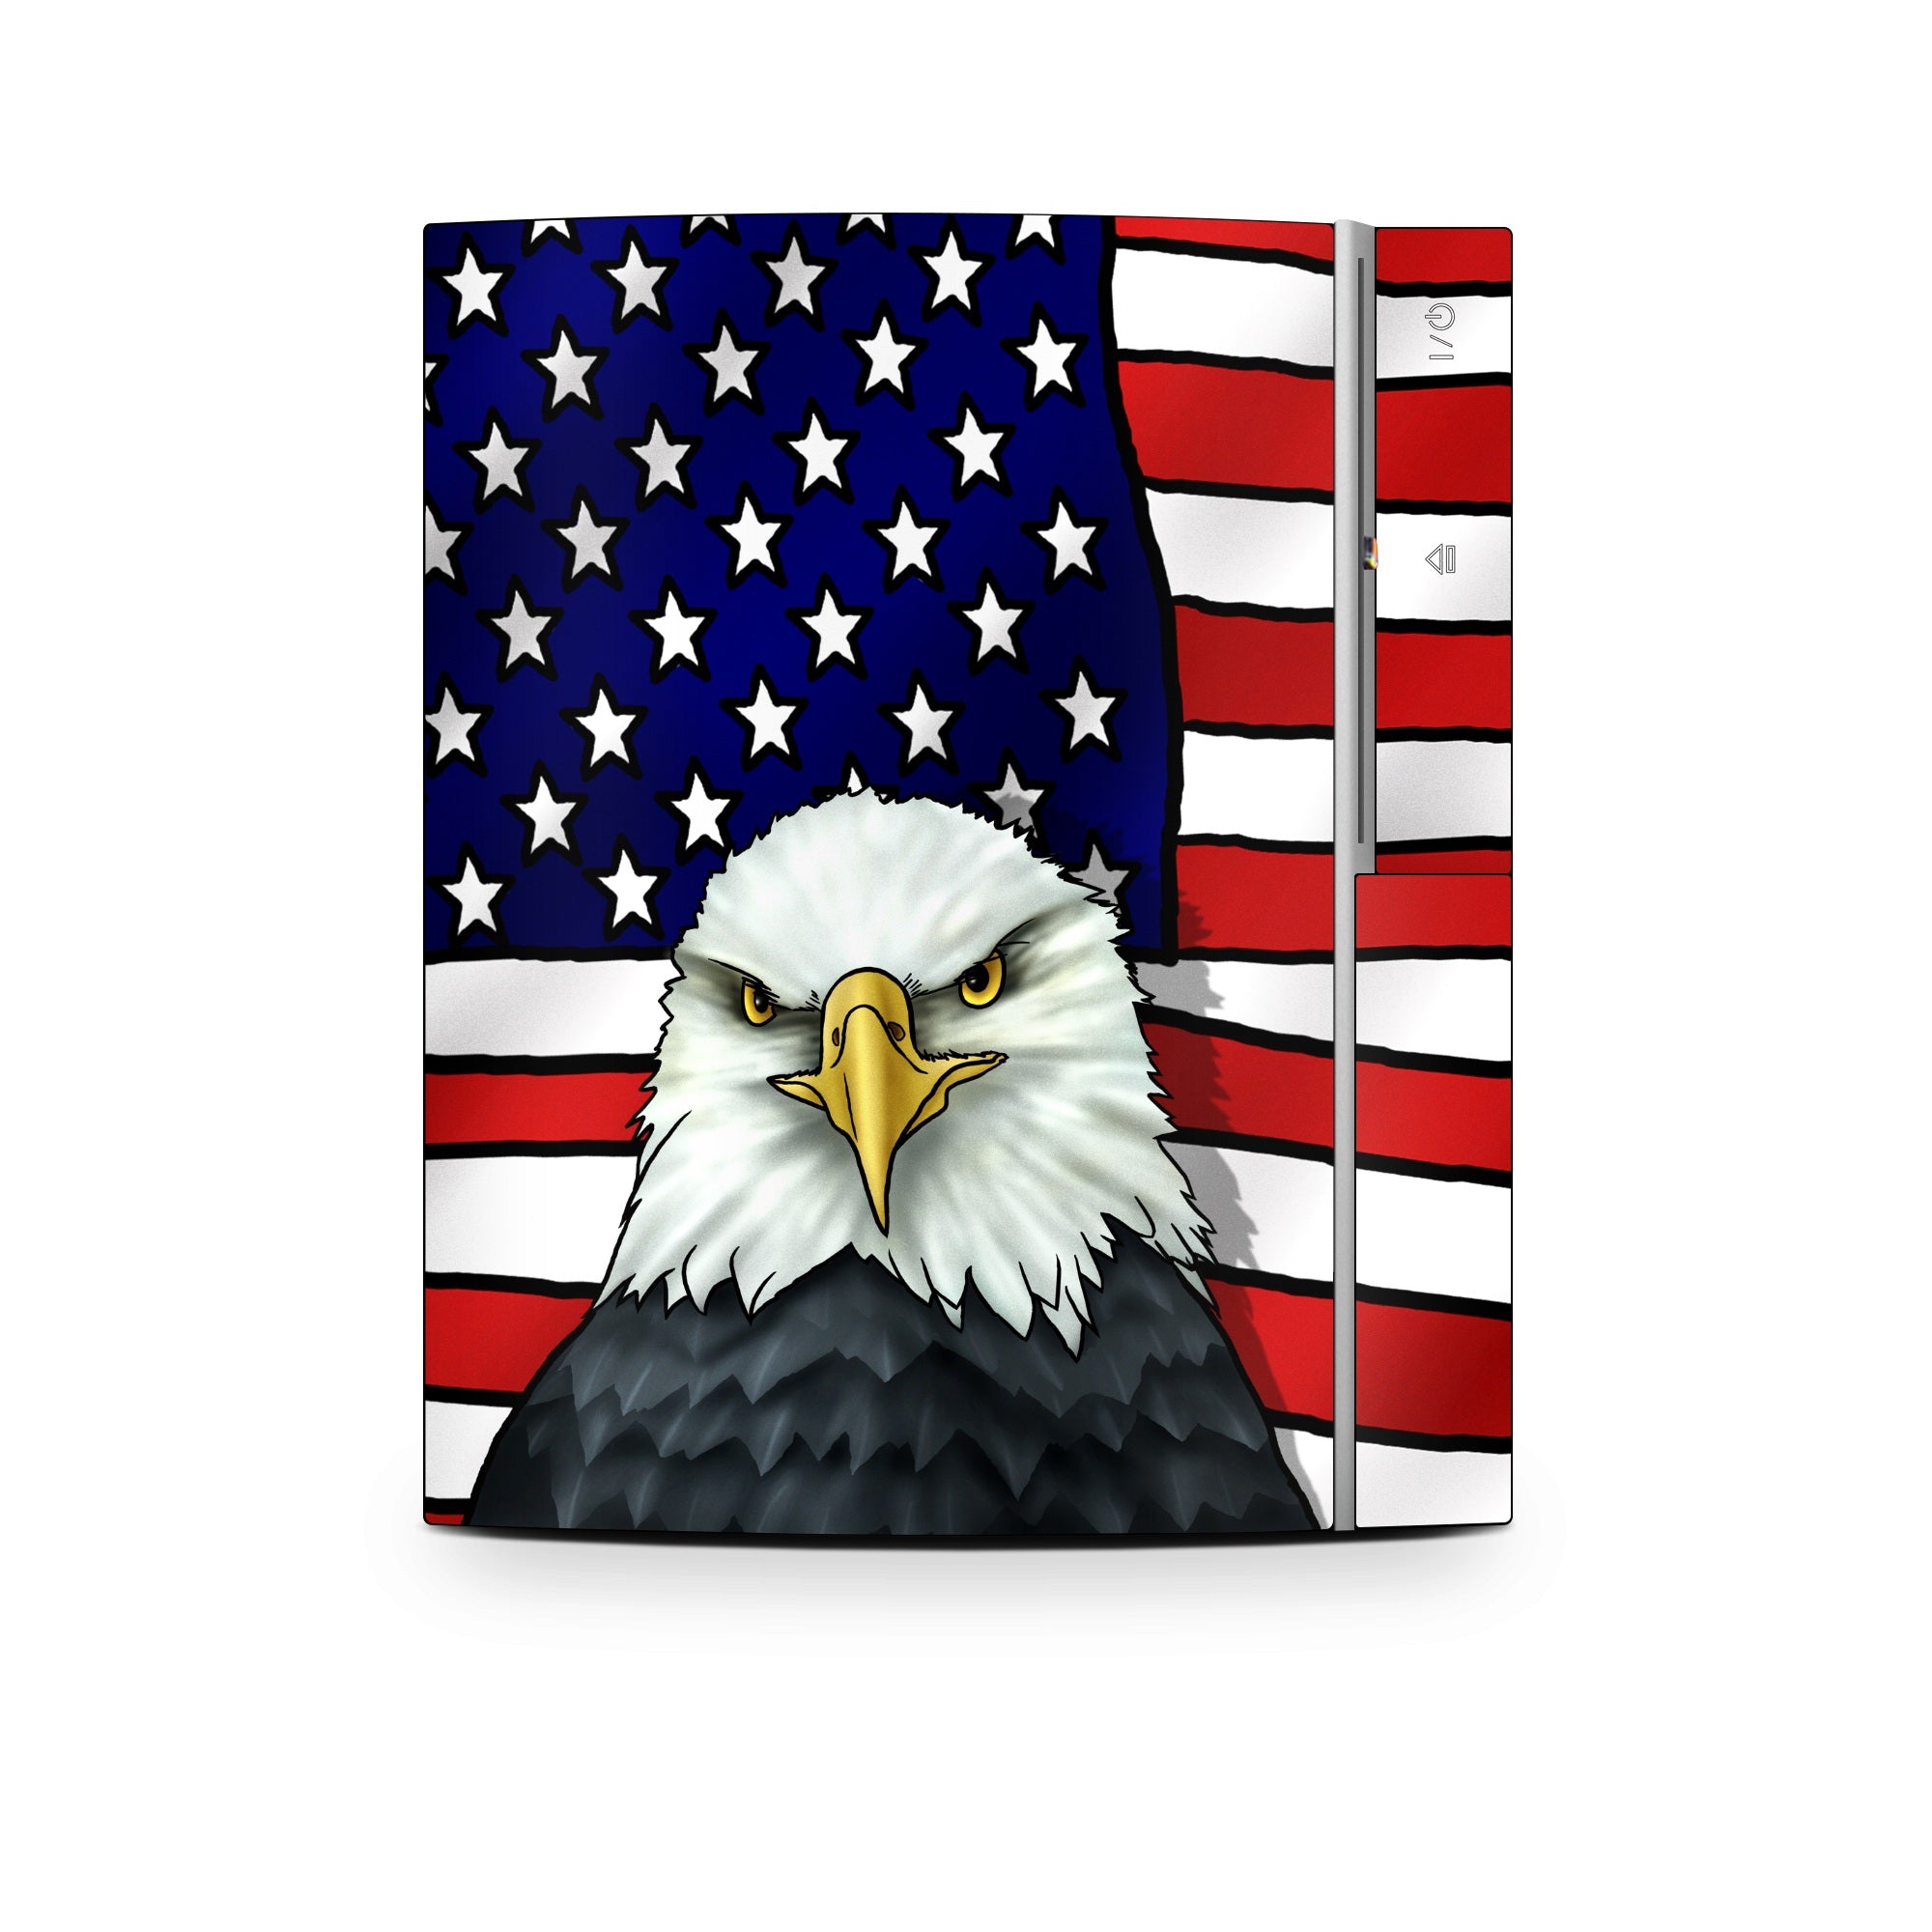 American Eagle - Sony PS3 Skin